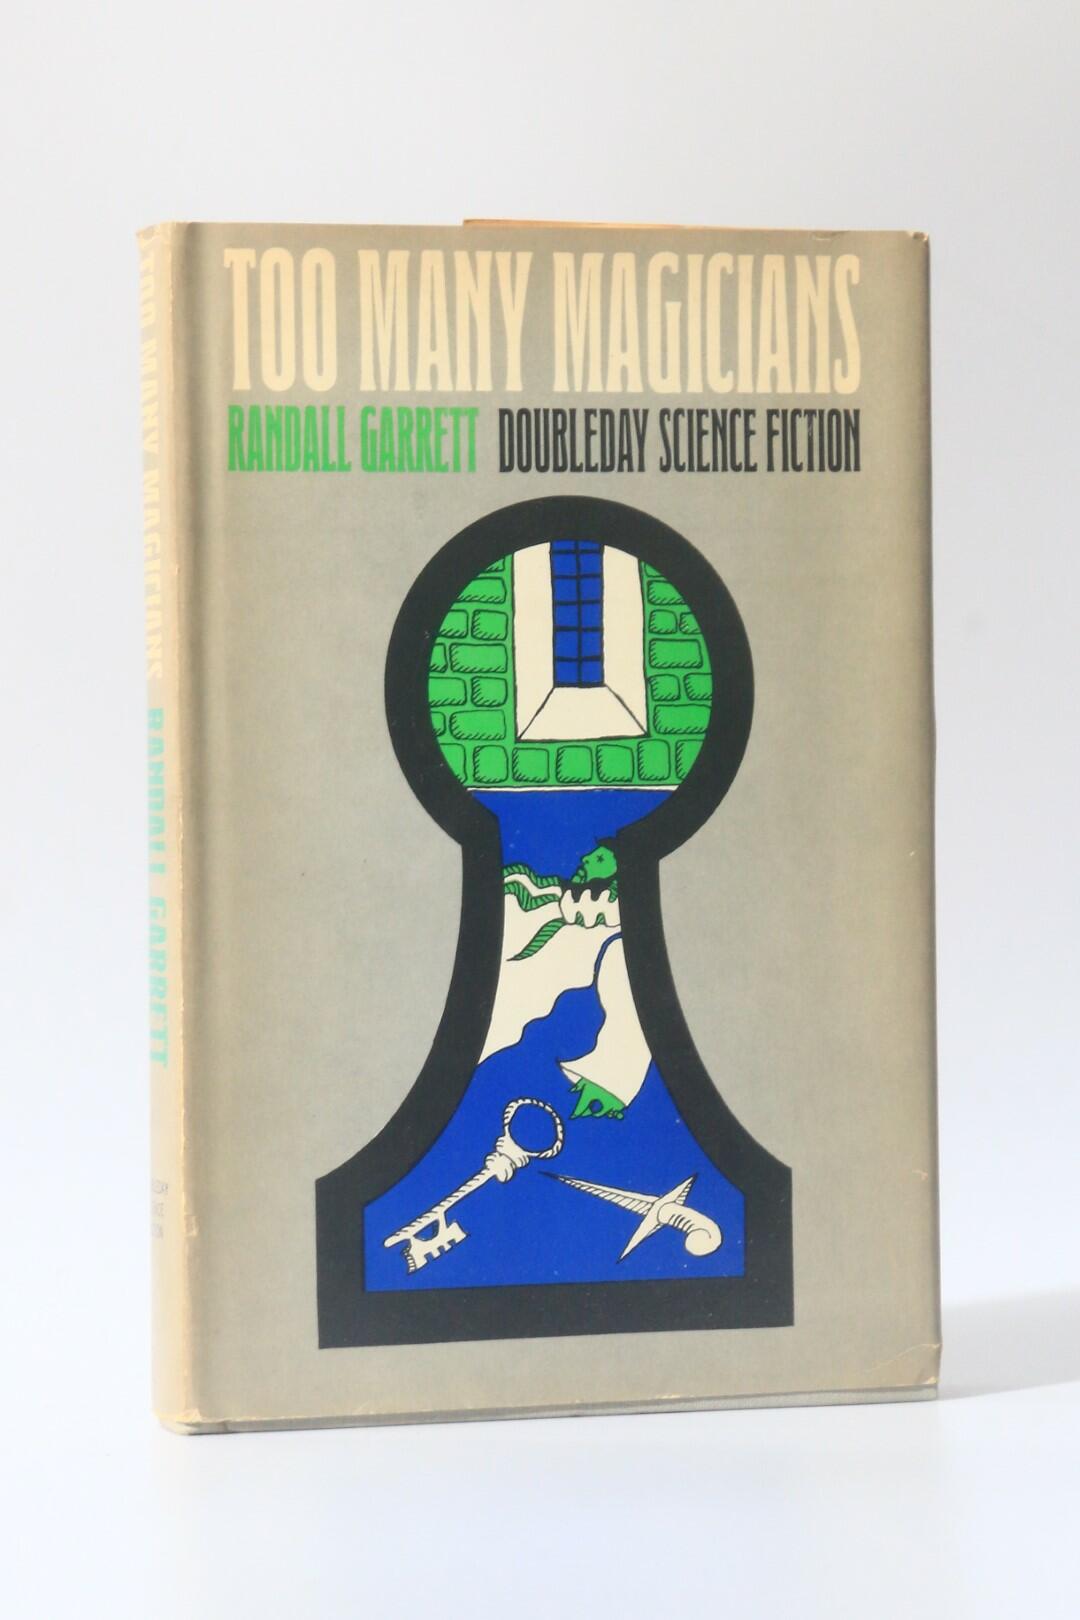 Randall Garrett - Too Many Magicians - Doubleday, 1967, First Edition.